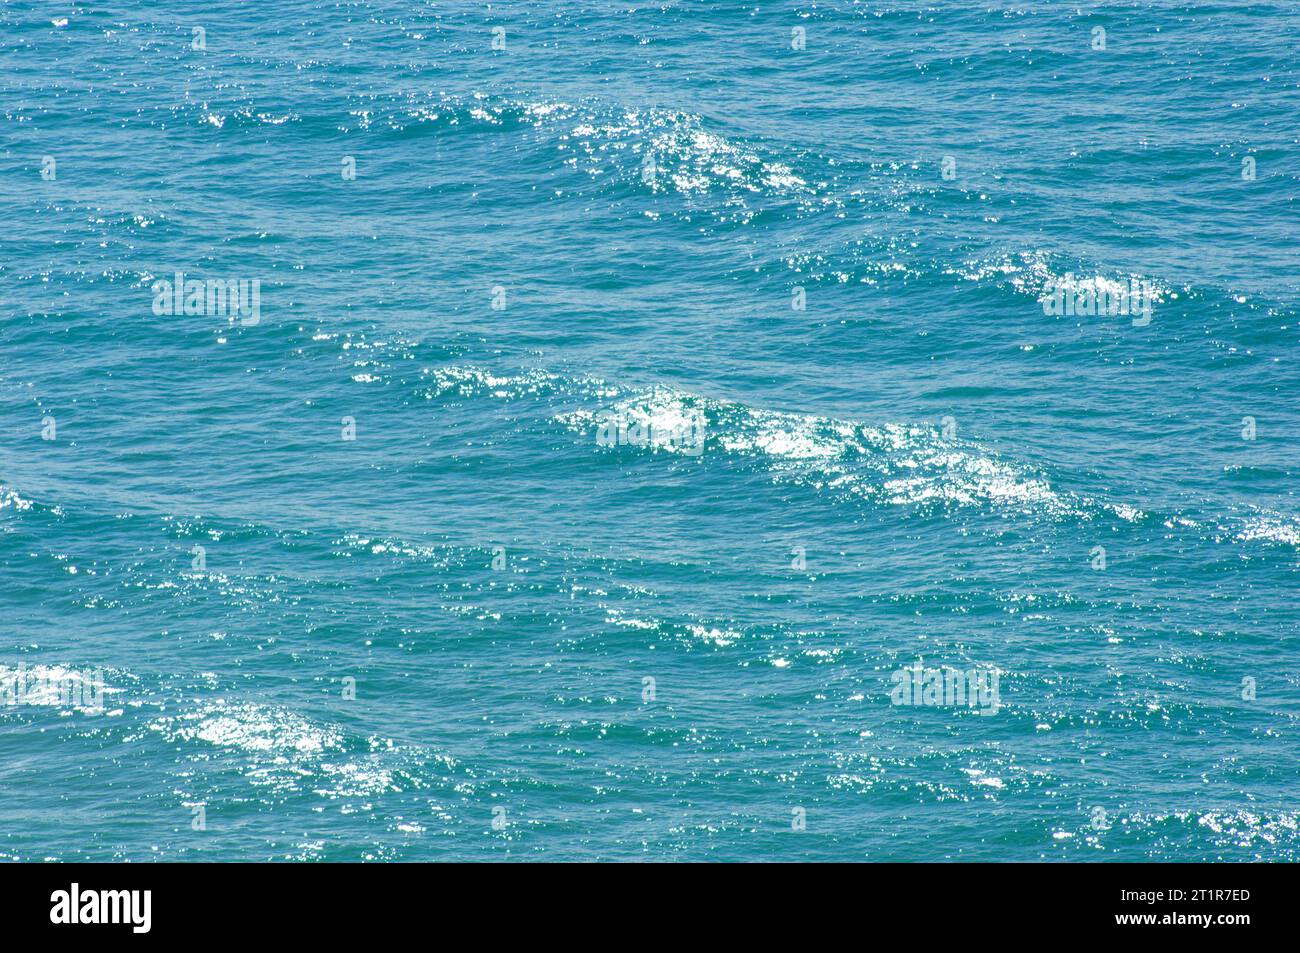 Full frame image of the Atlantic Ocean off the Cornish coast - John Gollop Stock Photo